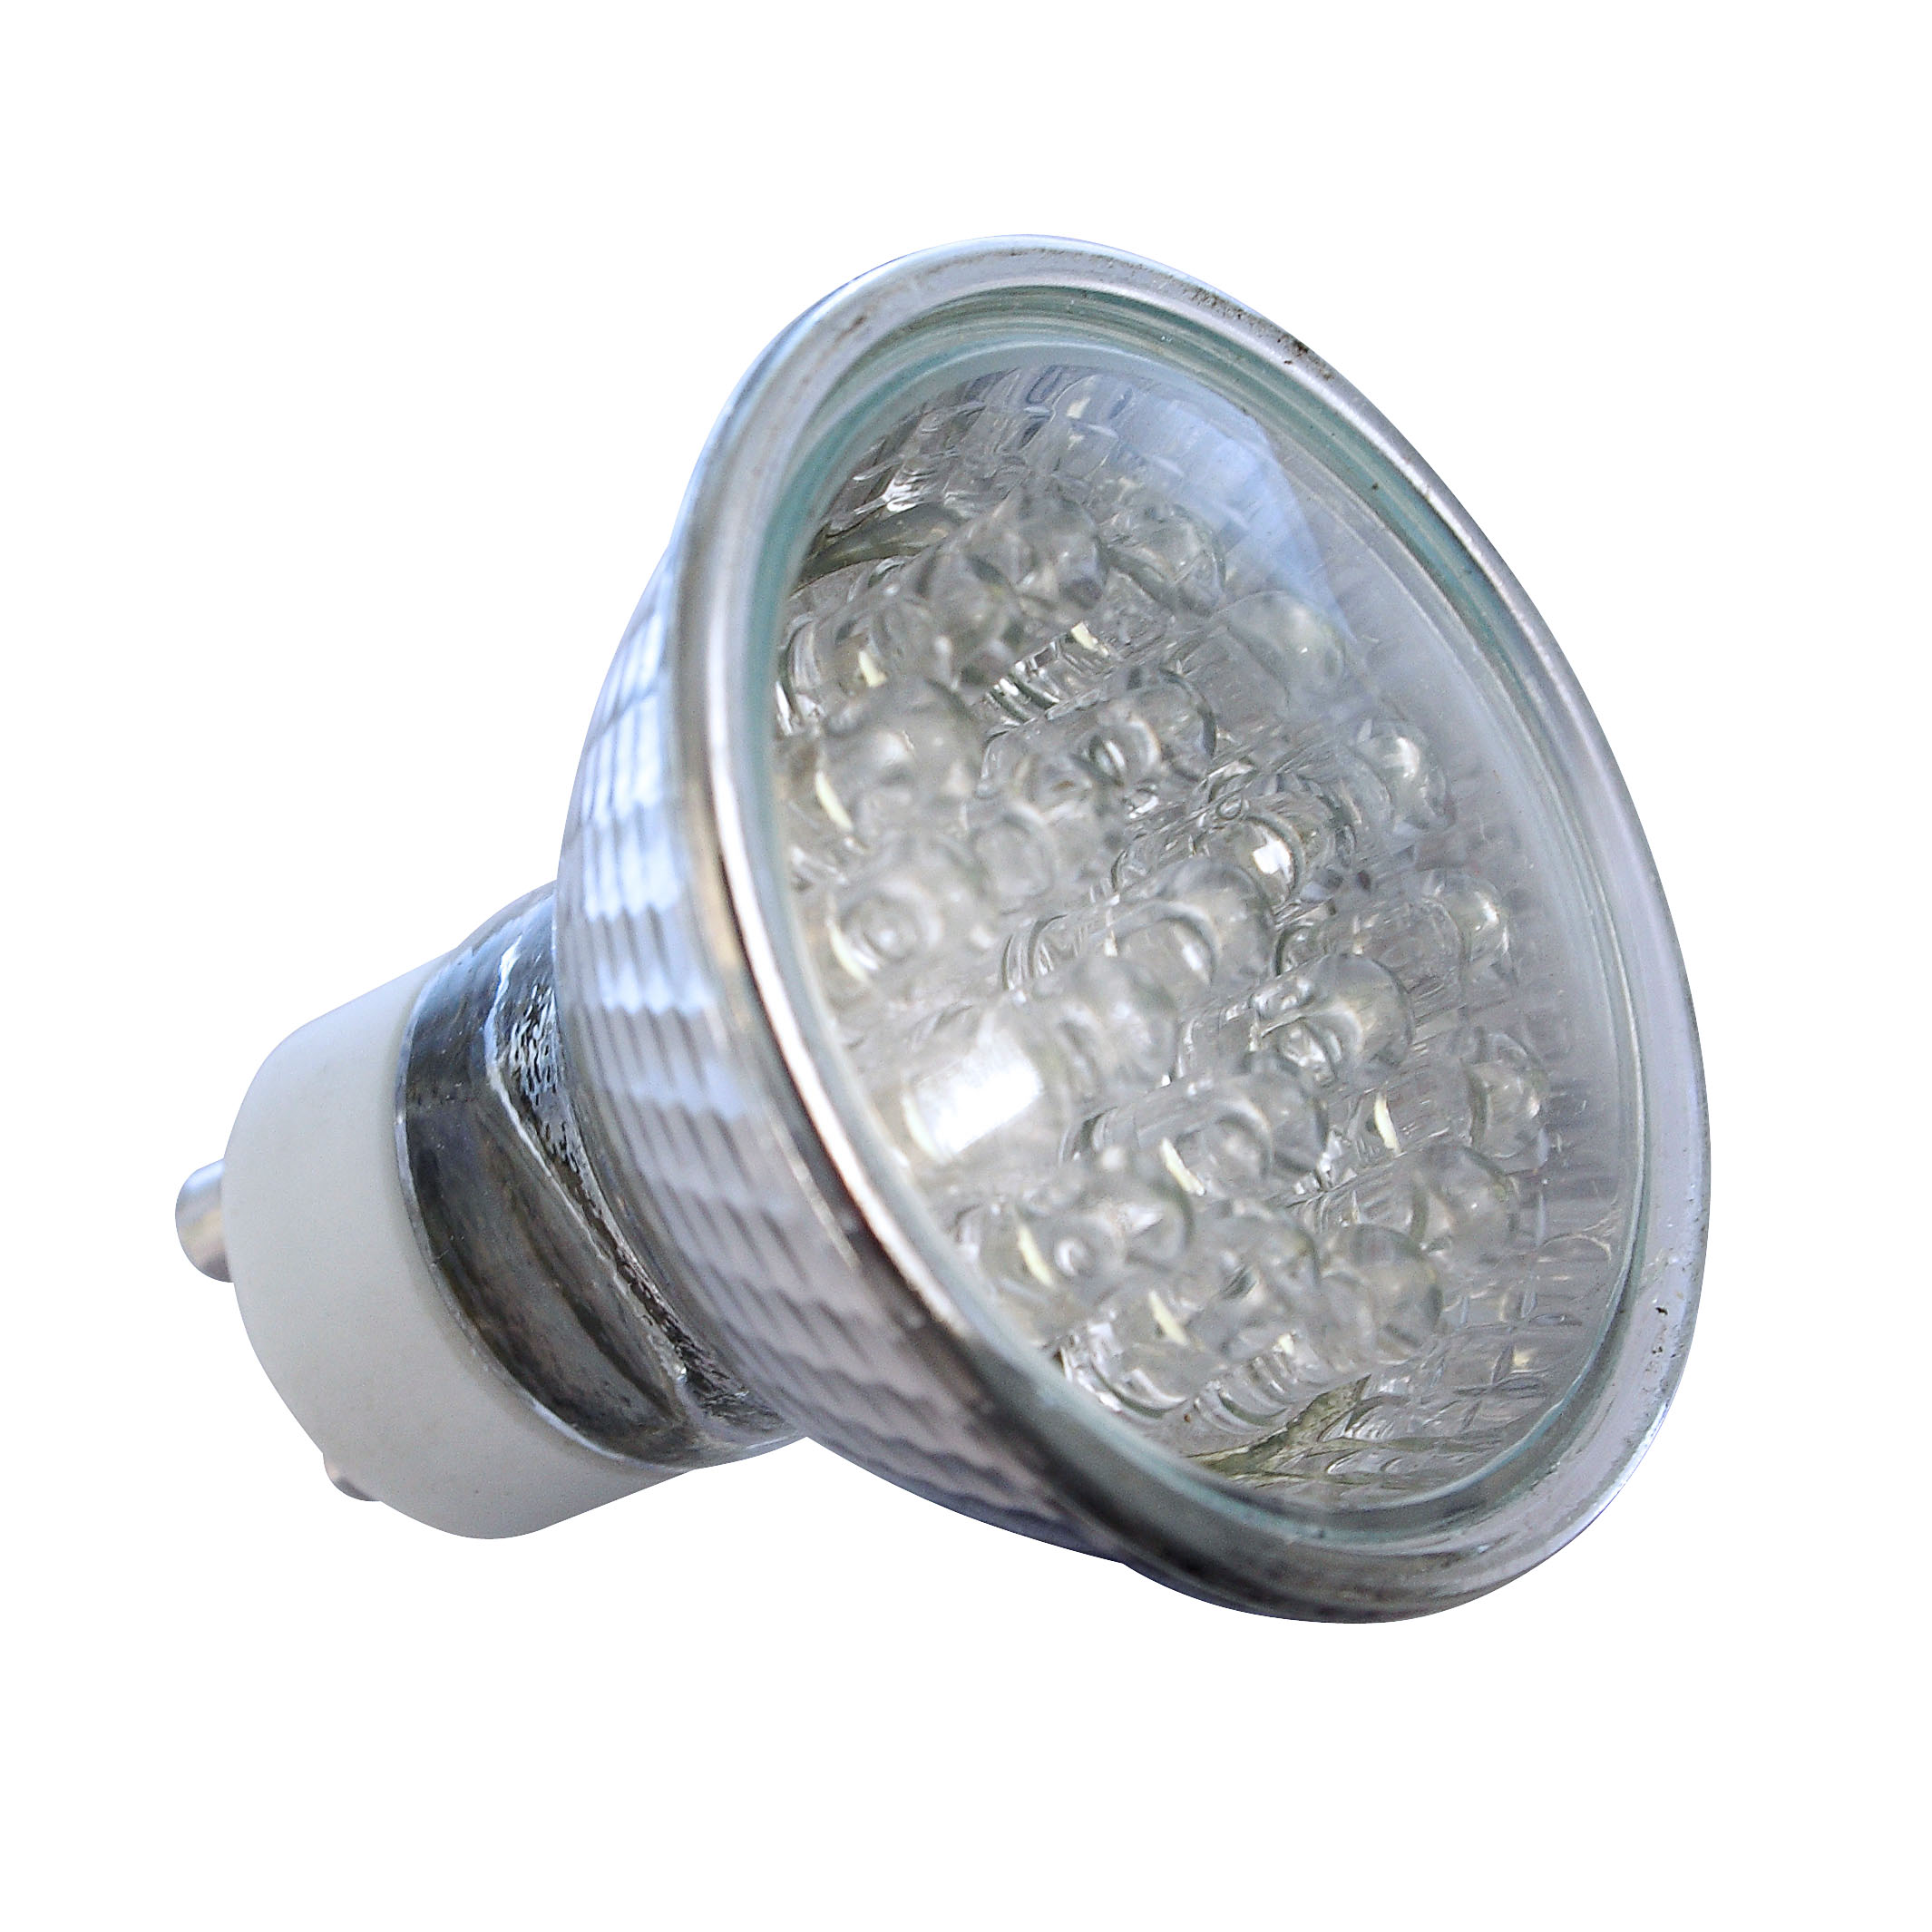 10 differnet types of popular Led lamps | Warisan Lighting